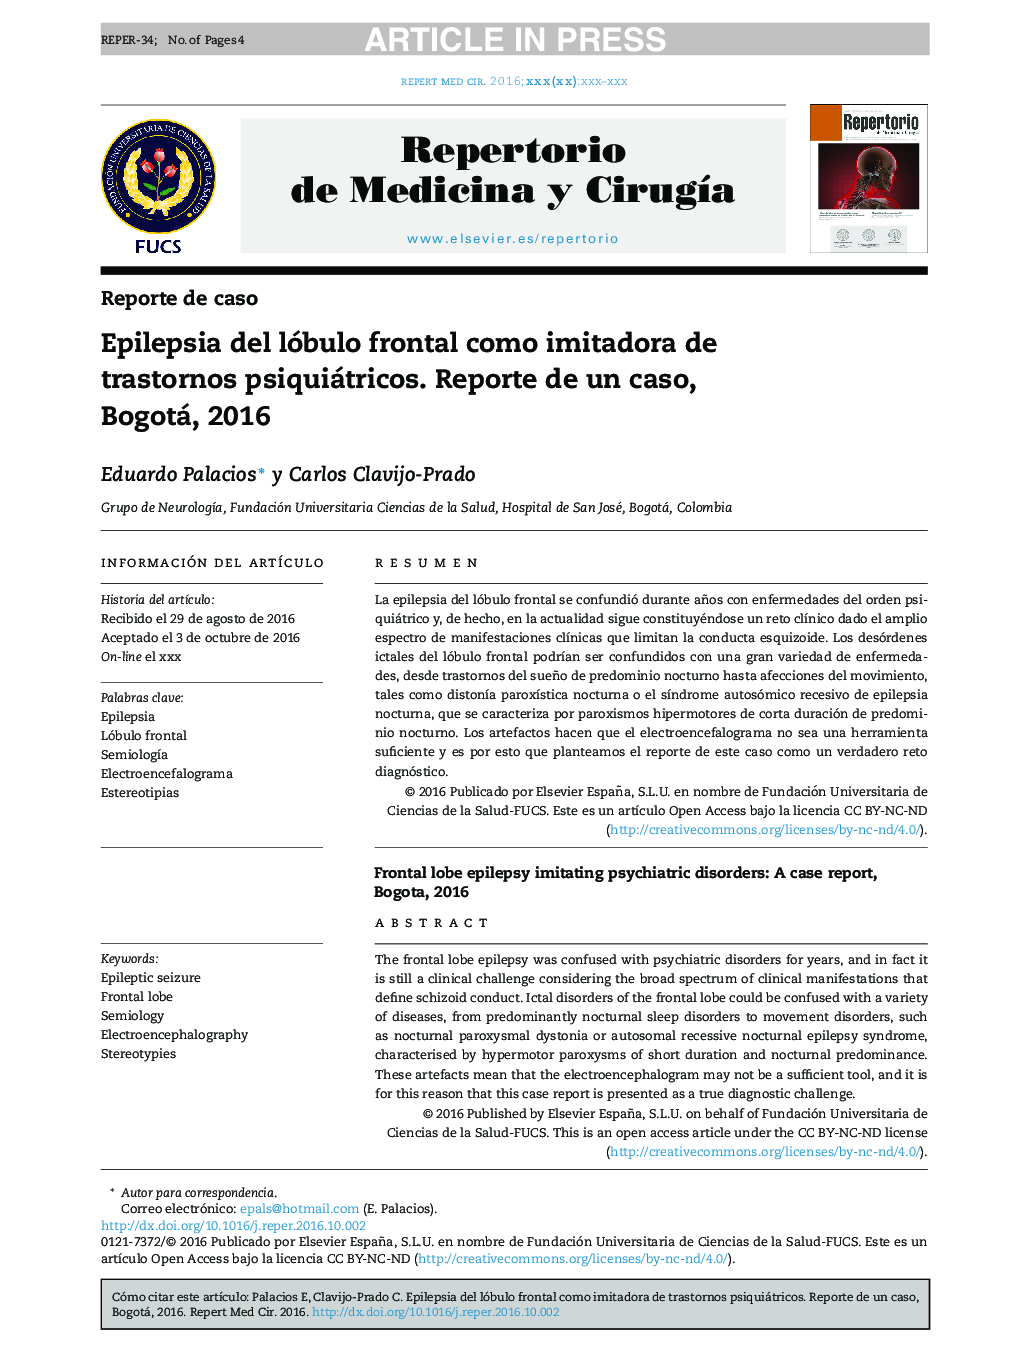 Epilepsia del lóbulo frontal como imitadora de trastornos psiquiátricos. Reporte de un caso, Bogotá, 2016